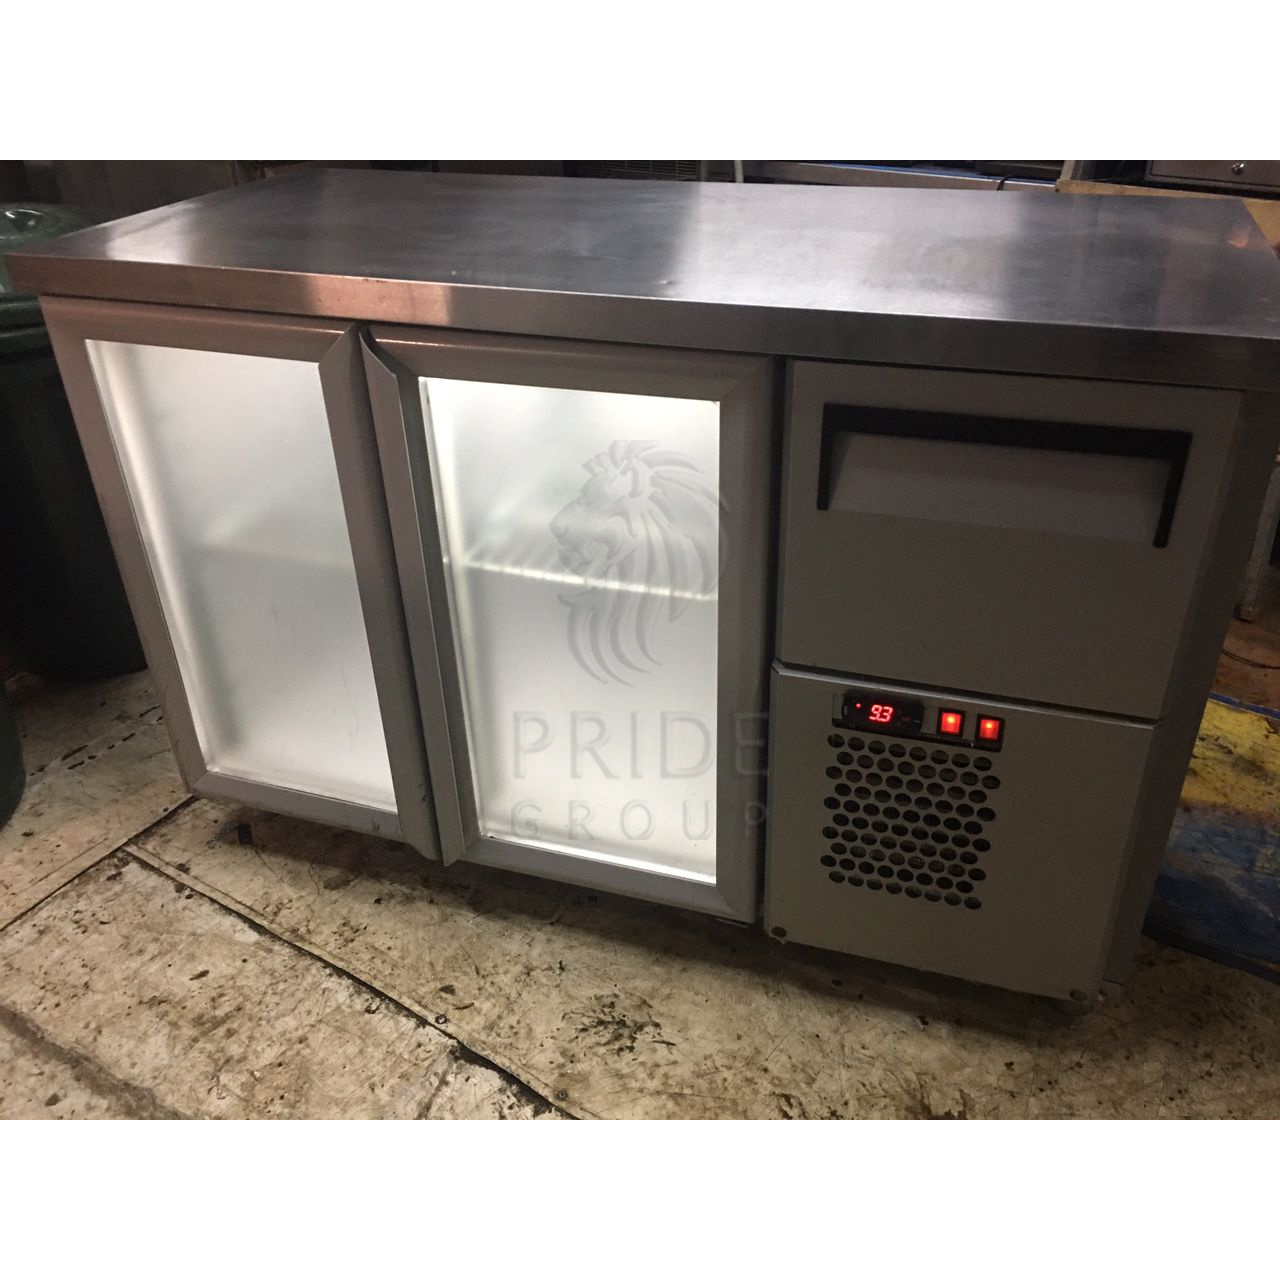 картинка Холодильный стол T70 M4-1-G 9006/9005 (4GNG/NT Carboma)